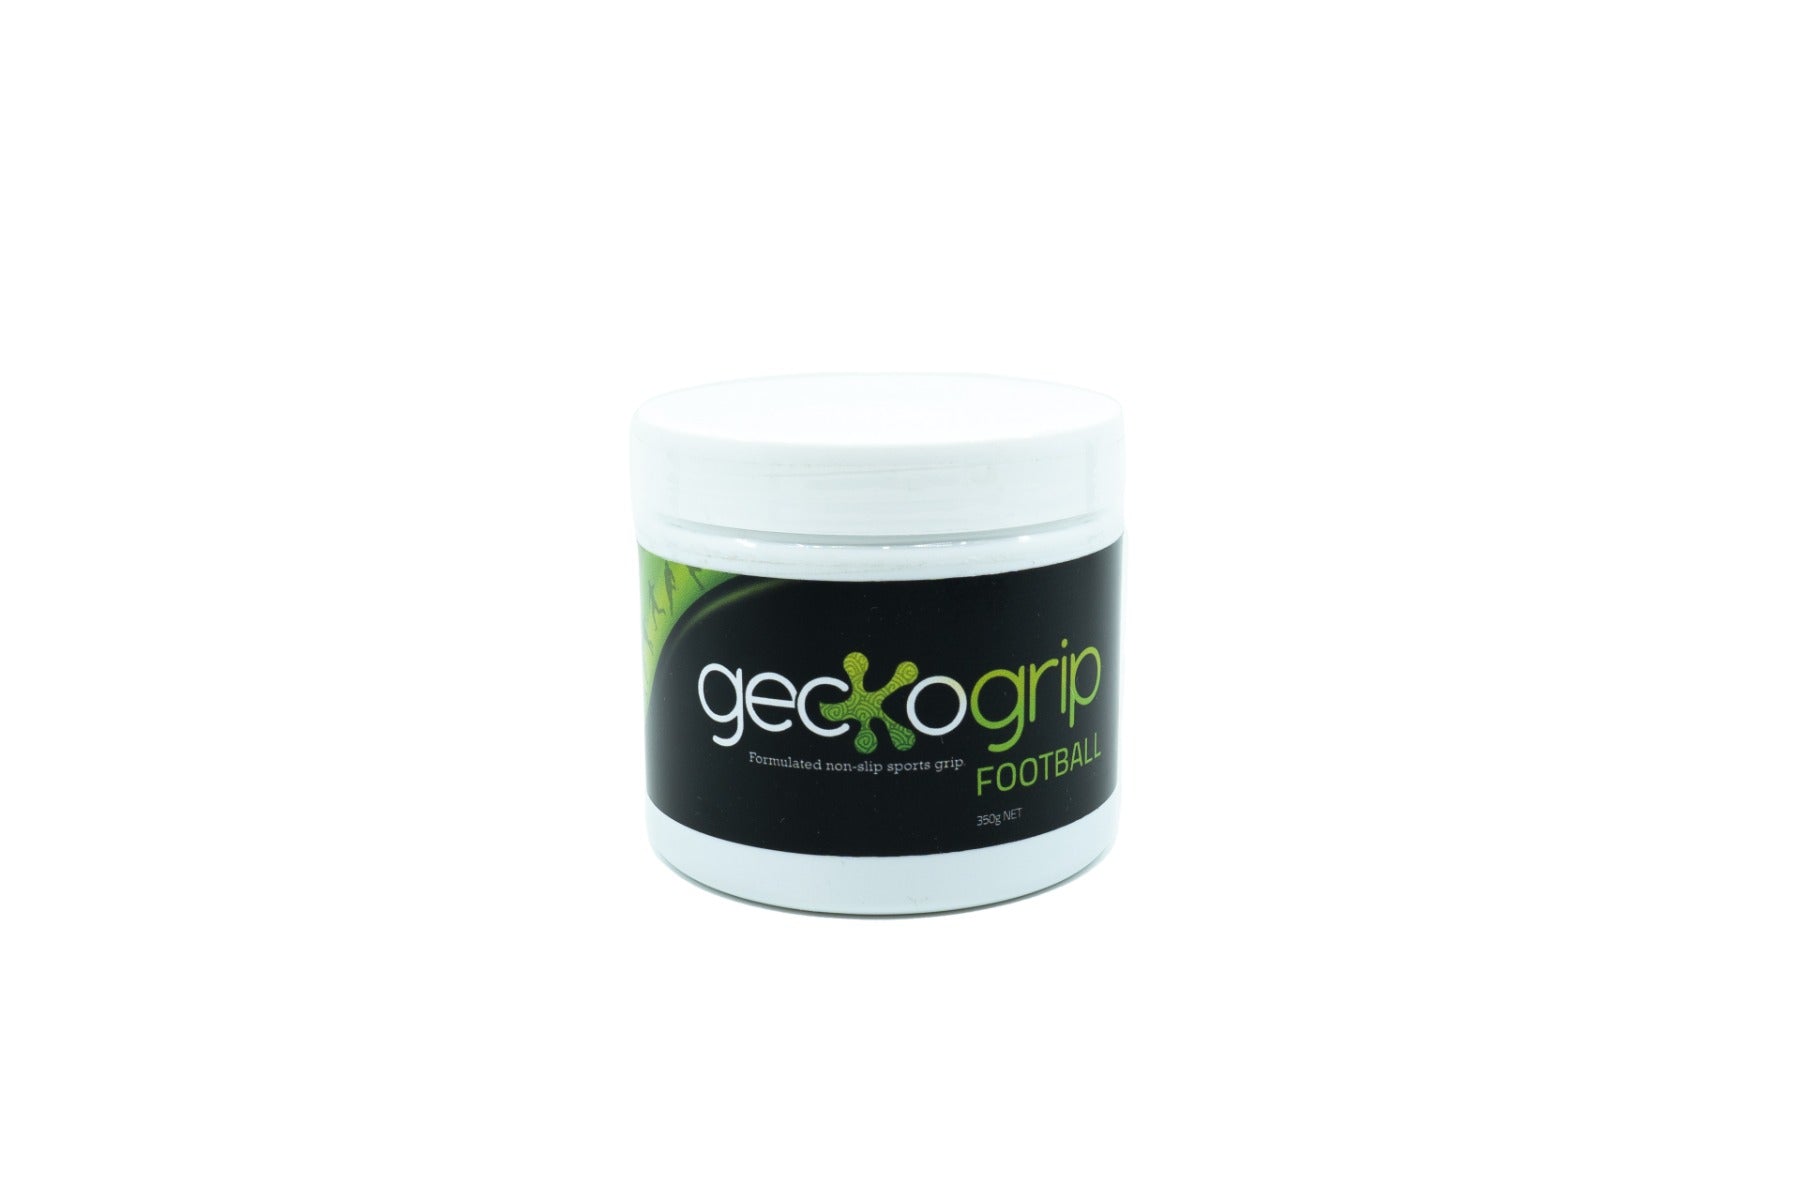 Geckogrip non-slip sports grip 350gms – MediPro Sports Tape